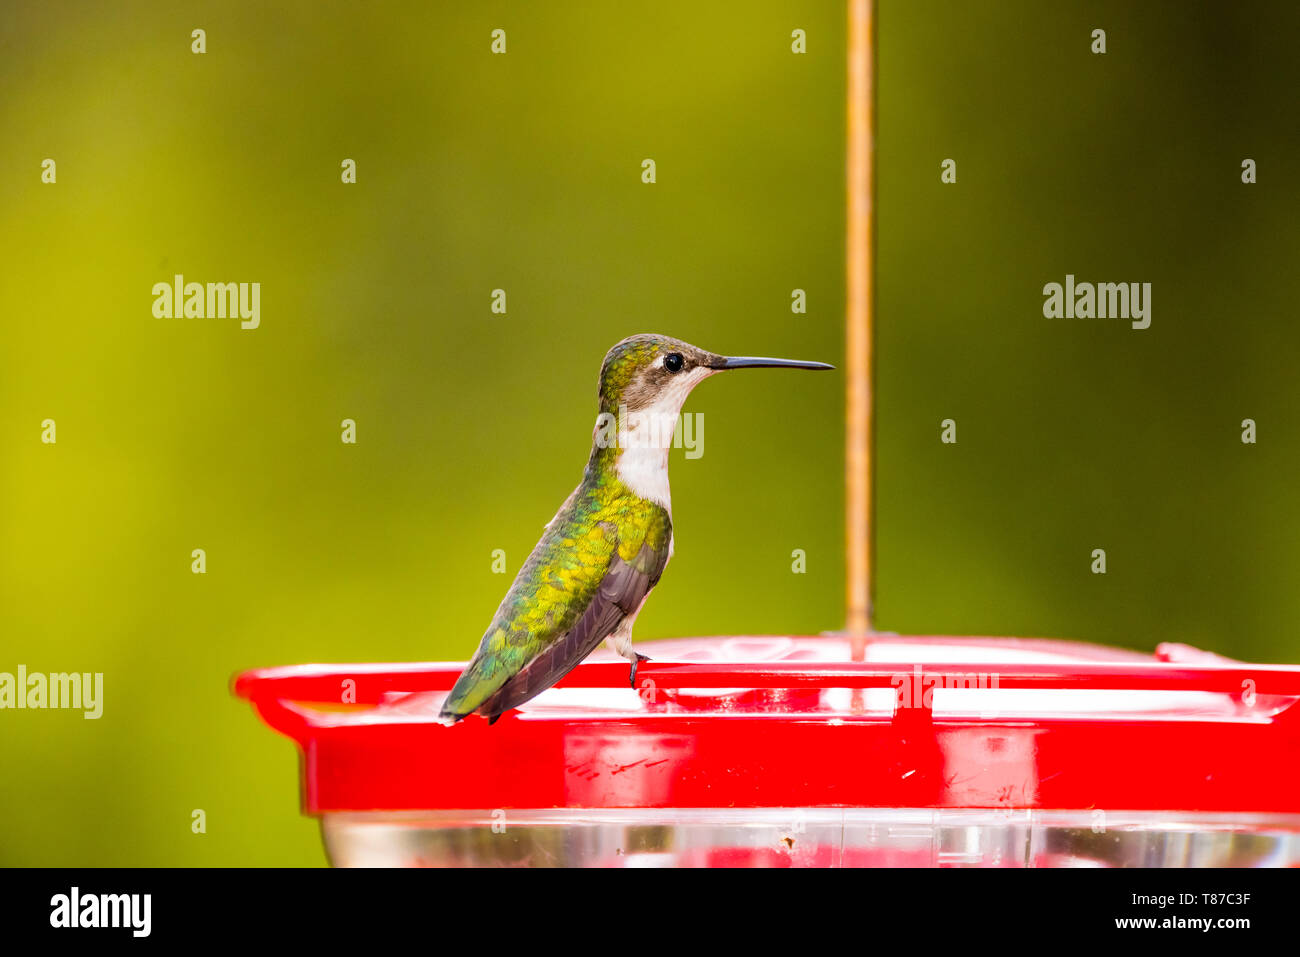 Femmina Hummingbird Ruby-Throated sulla plastica rosso hummingbird alimentatore. Foto Stock